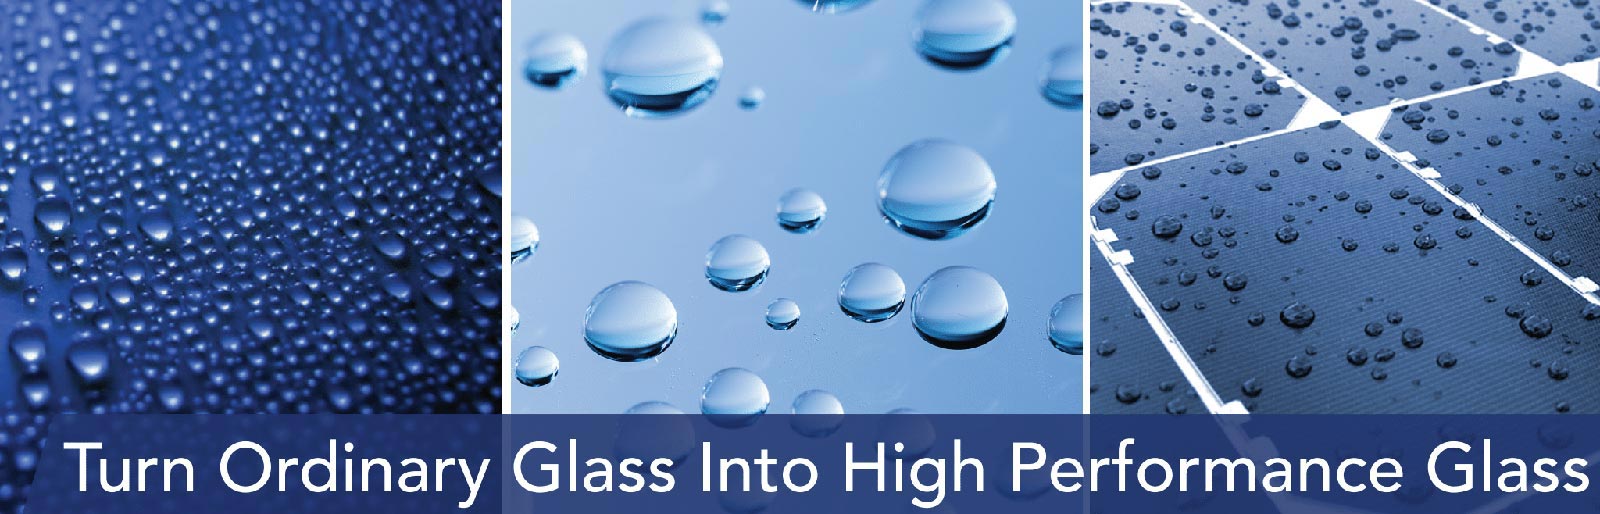 Turn Ordinary Glass Into High Performance Glass